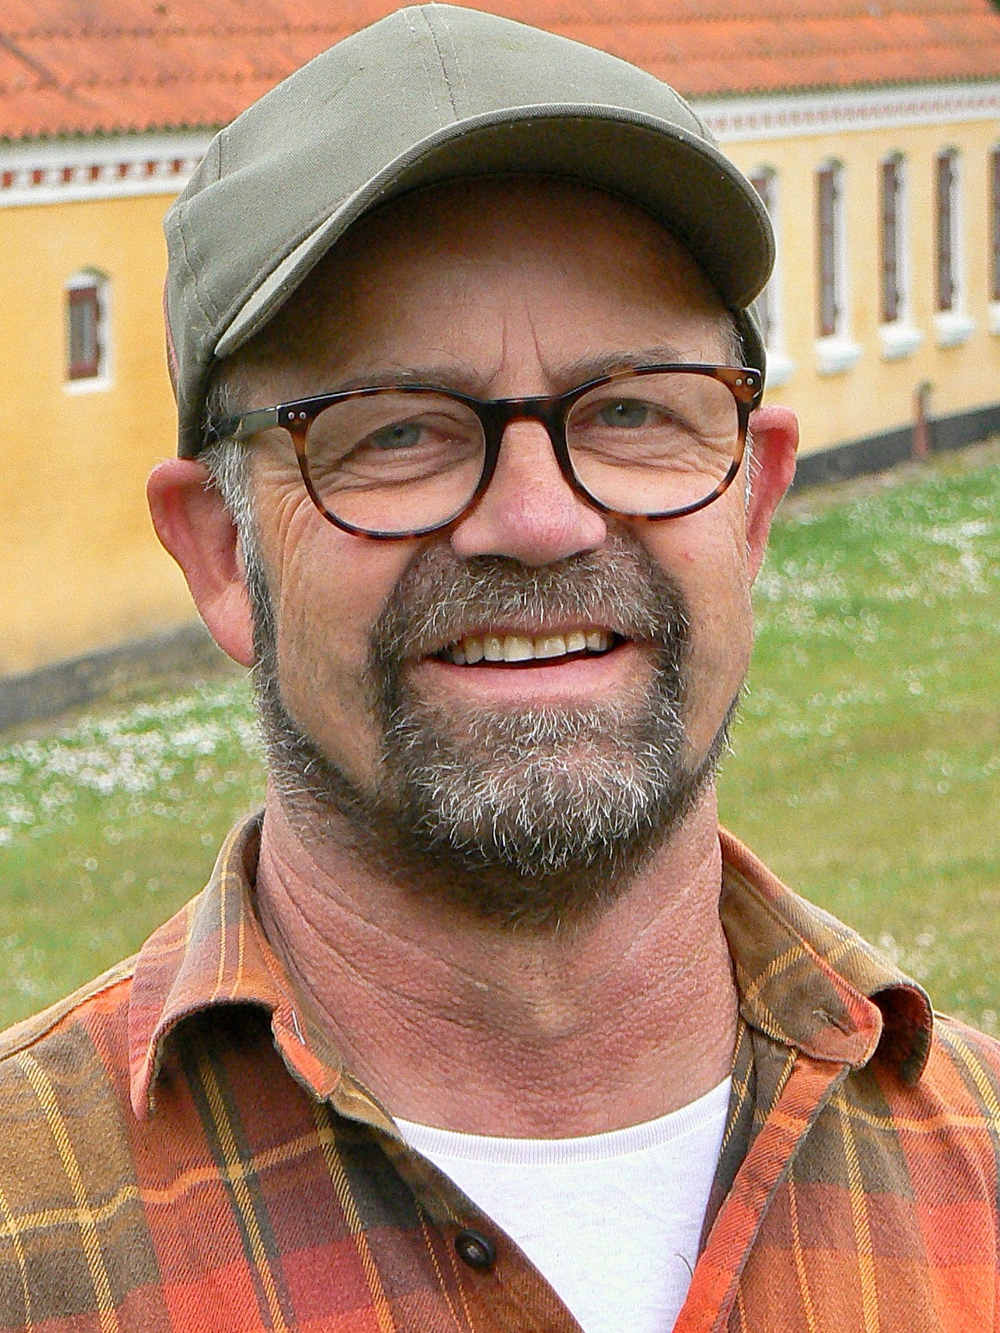 Christian Sander Andersen